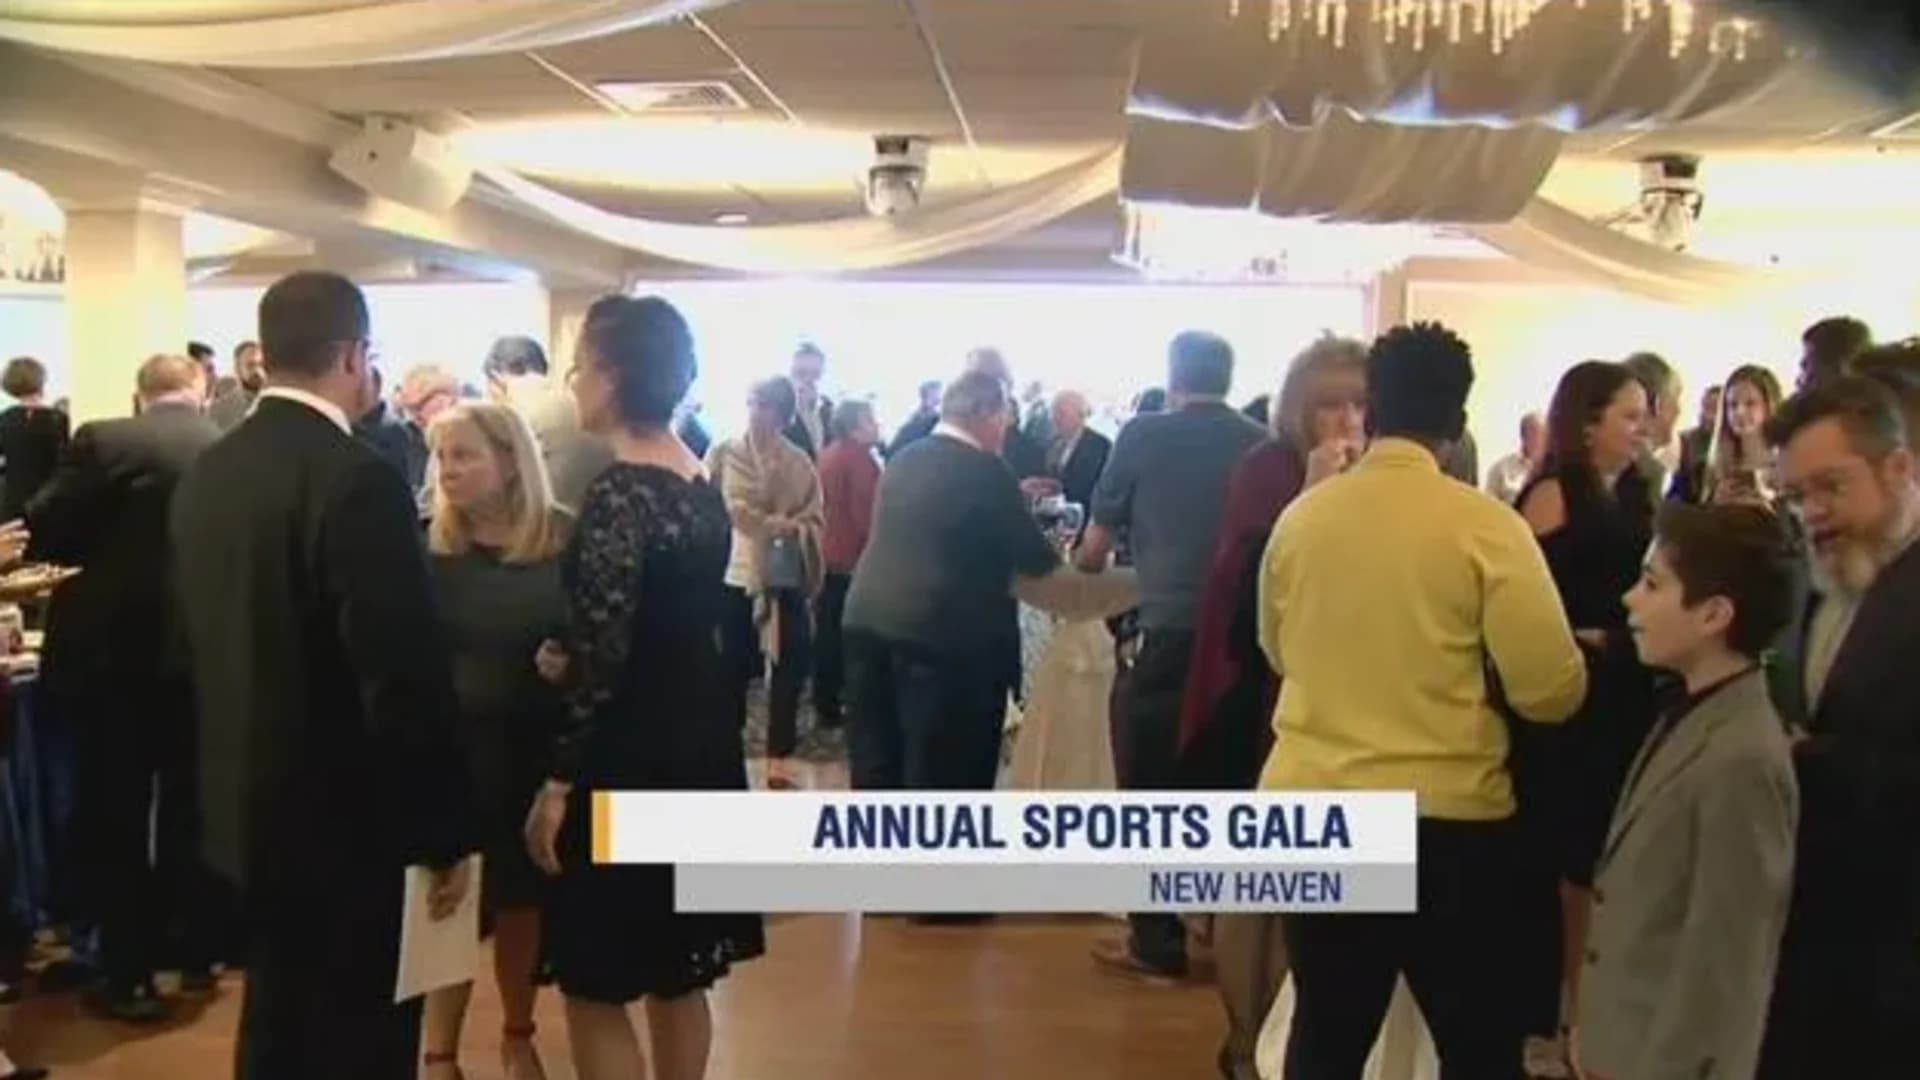 Sports gala raises money for first responders battling cancer